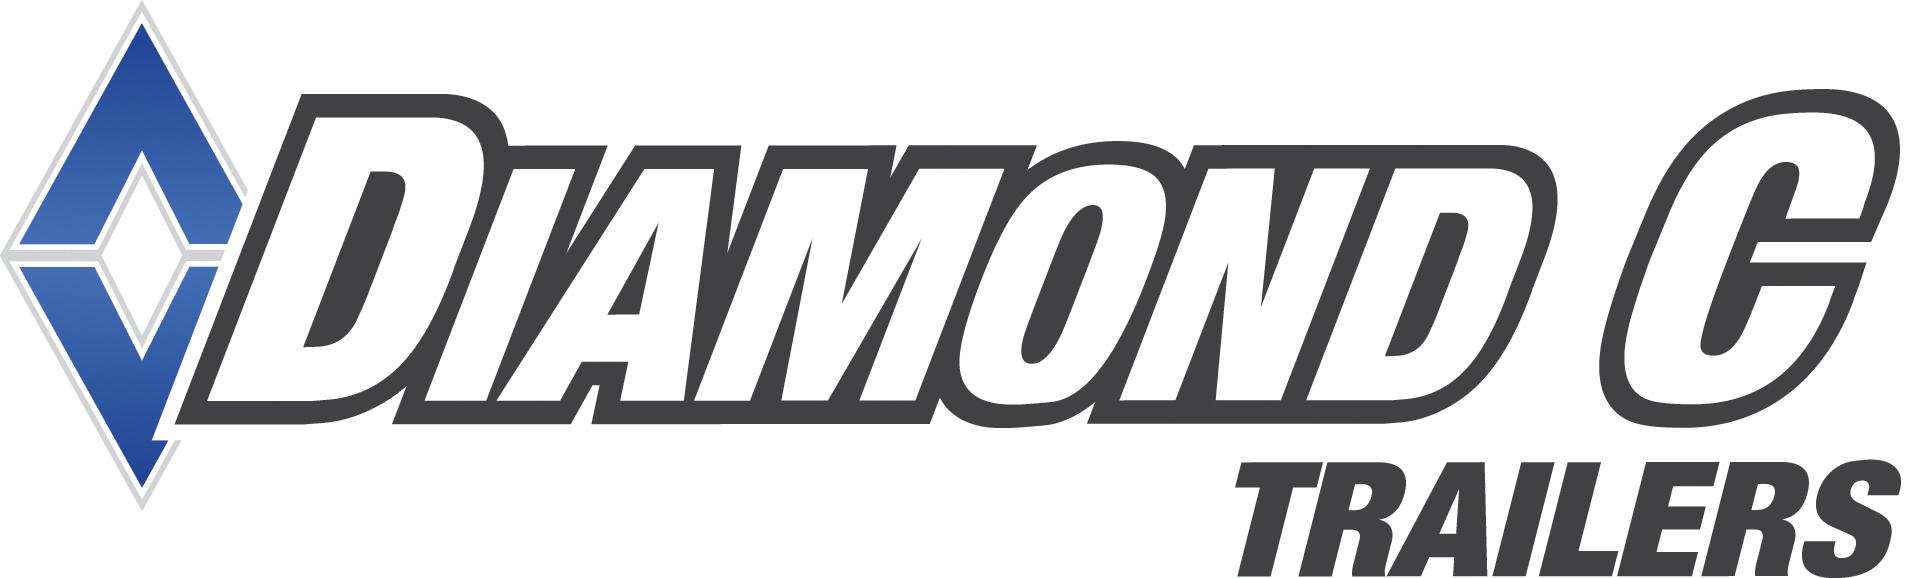 C in Diamond Logo - Logos | Diamond C Trailers